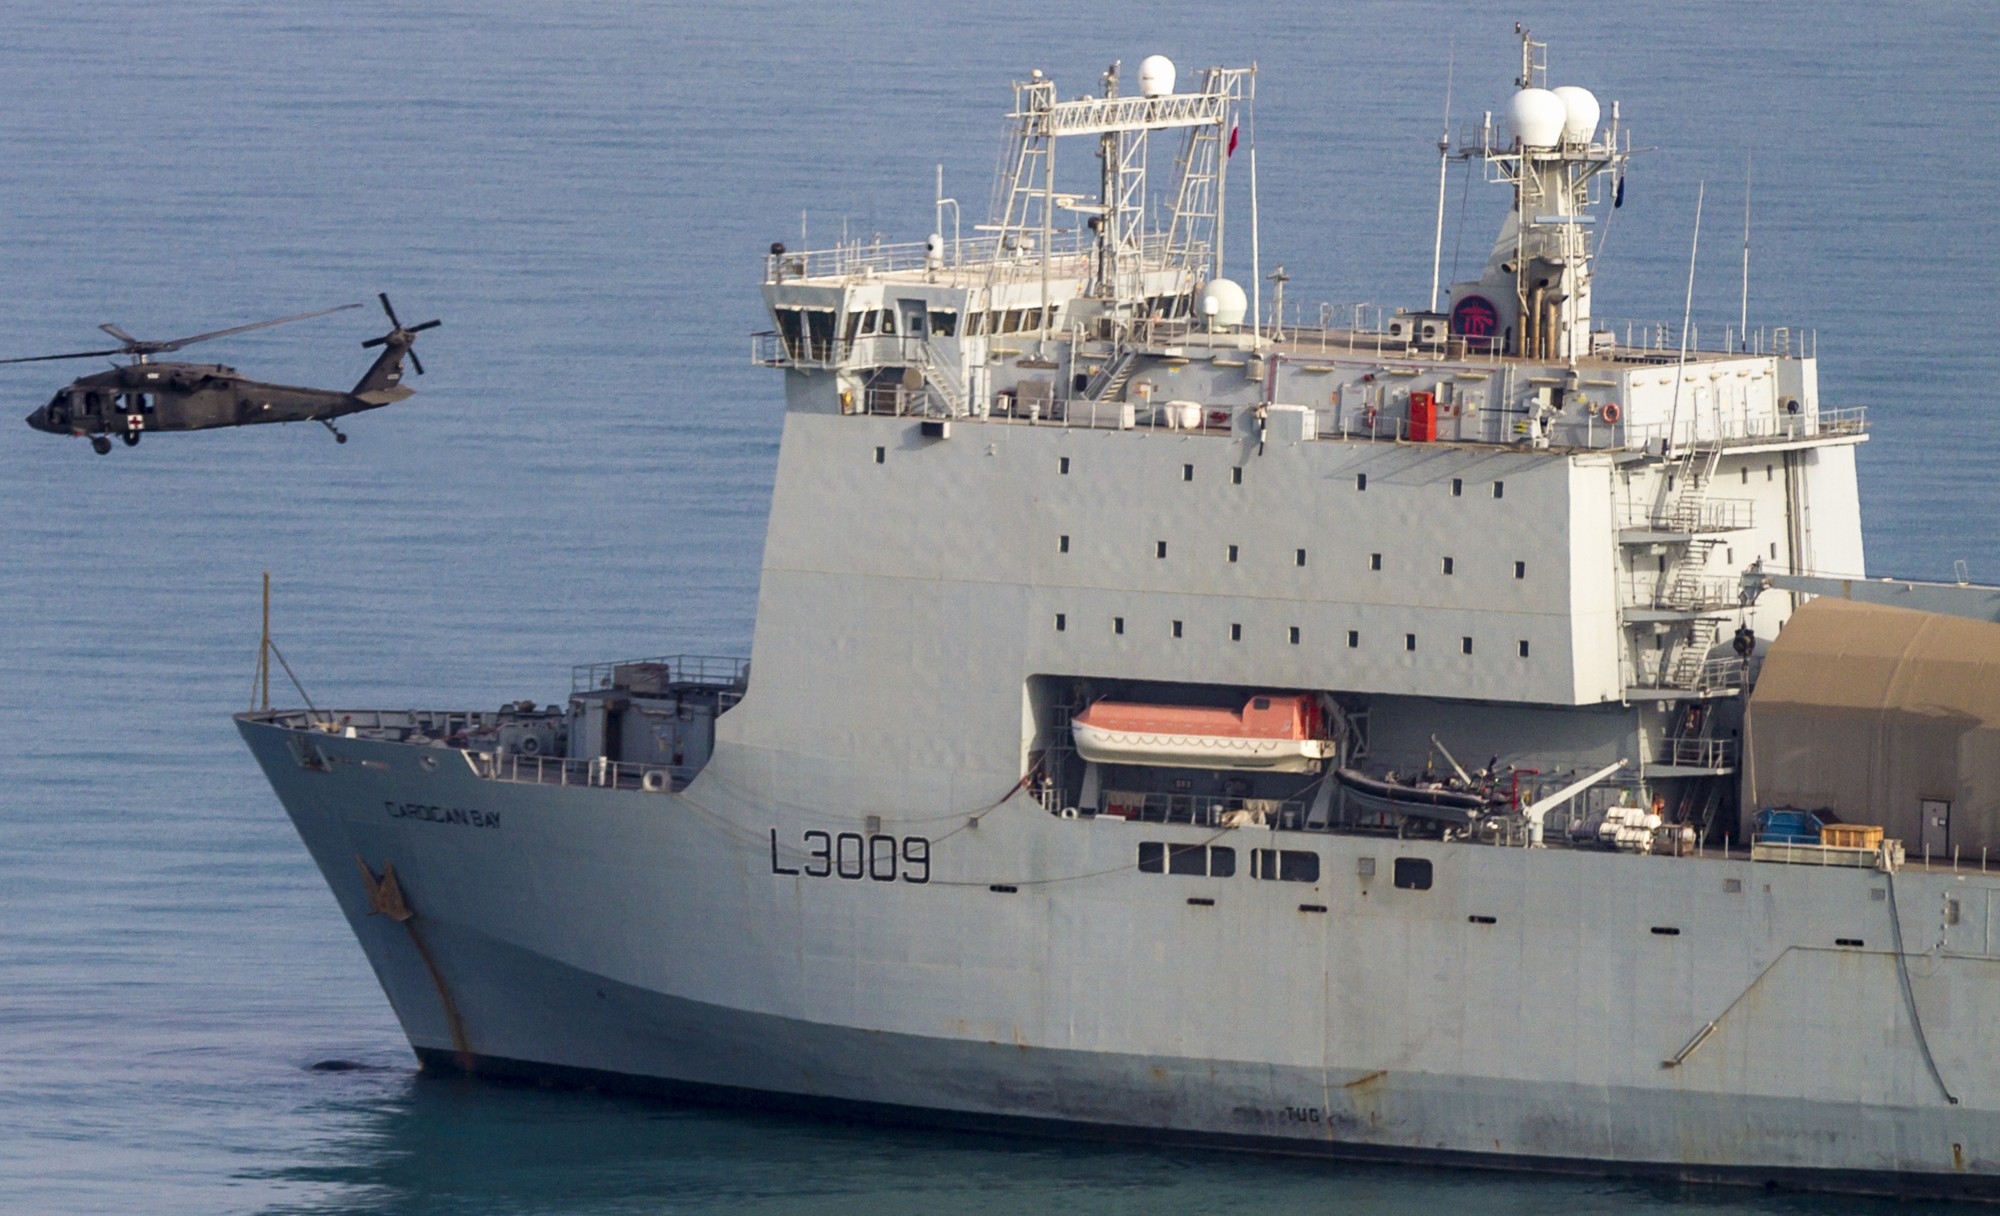 l-3009 rfa cardigan bay dock landing ship lsd royal fleet auxilary navy 25